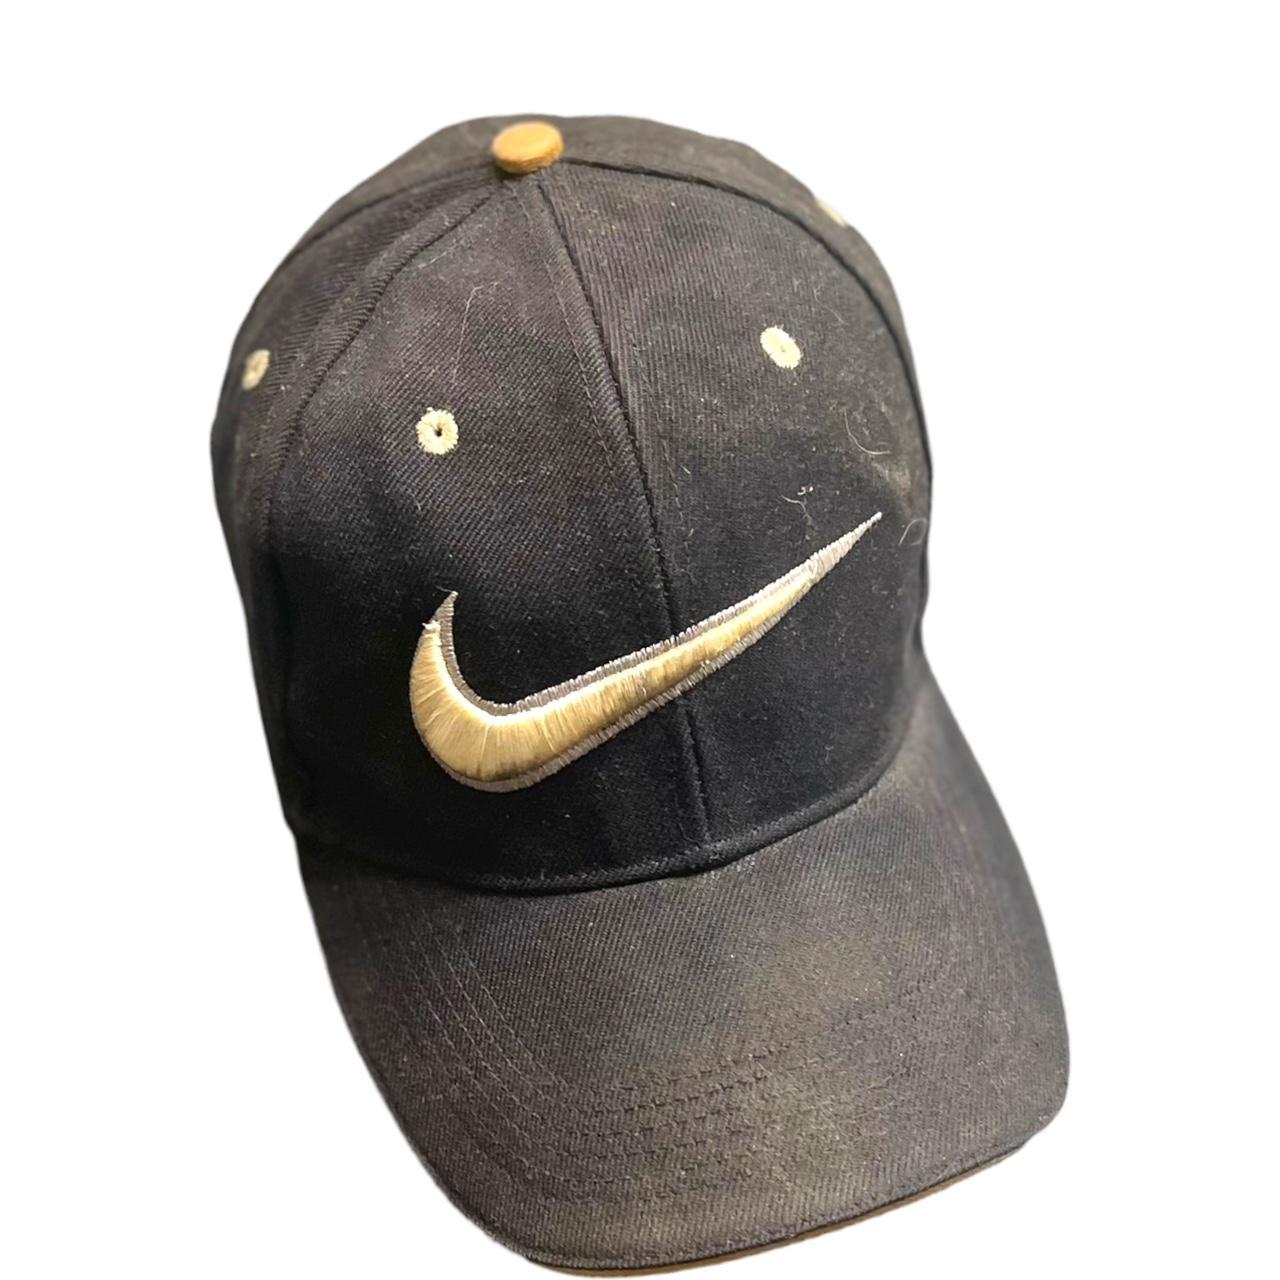 Vintage Nike Big Swoosh Hat / Cap, Black with Tan